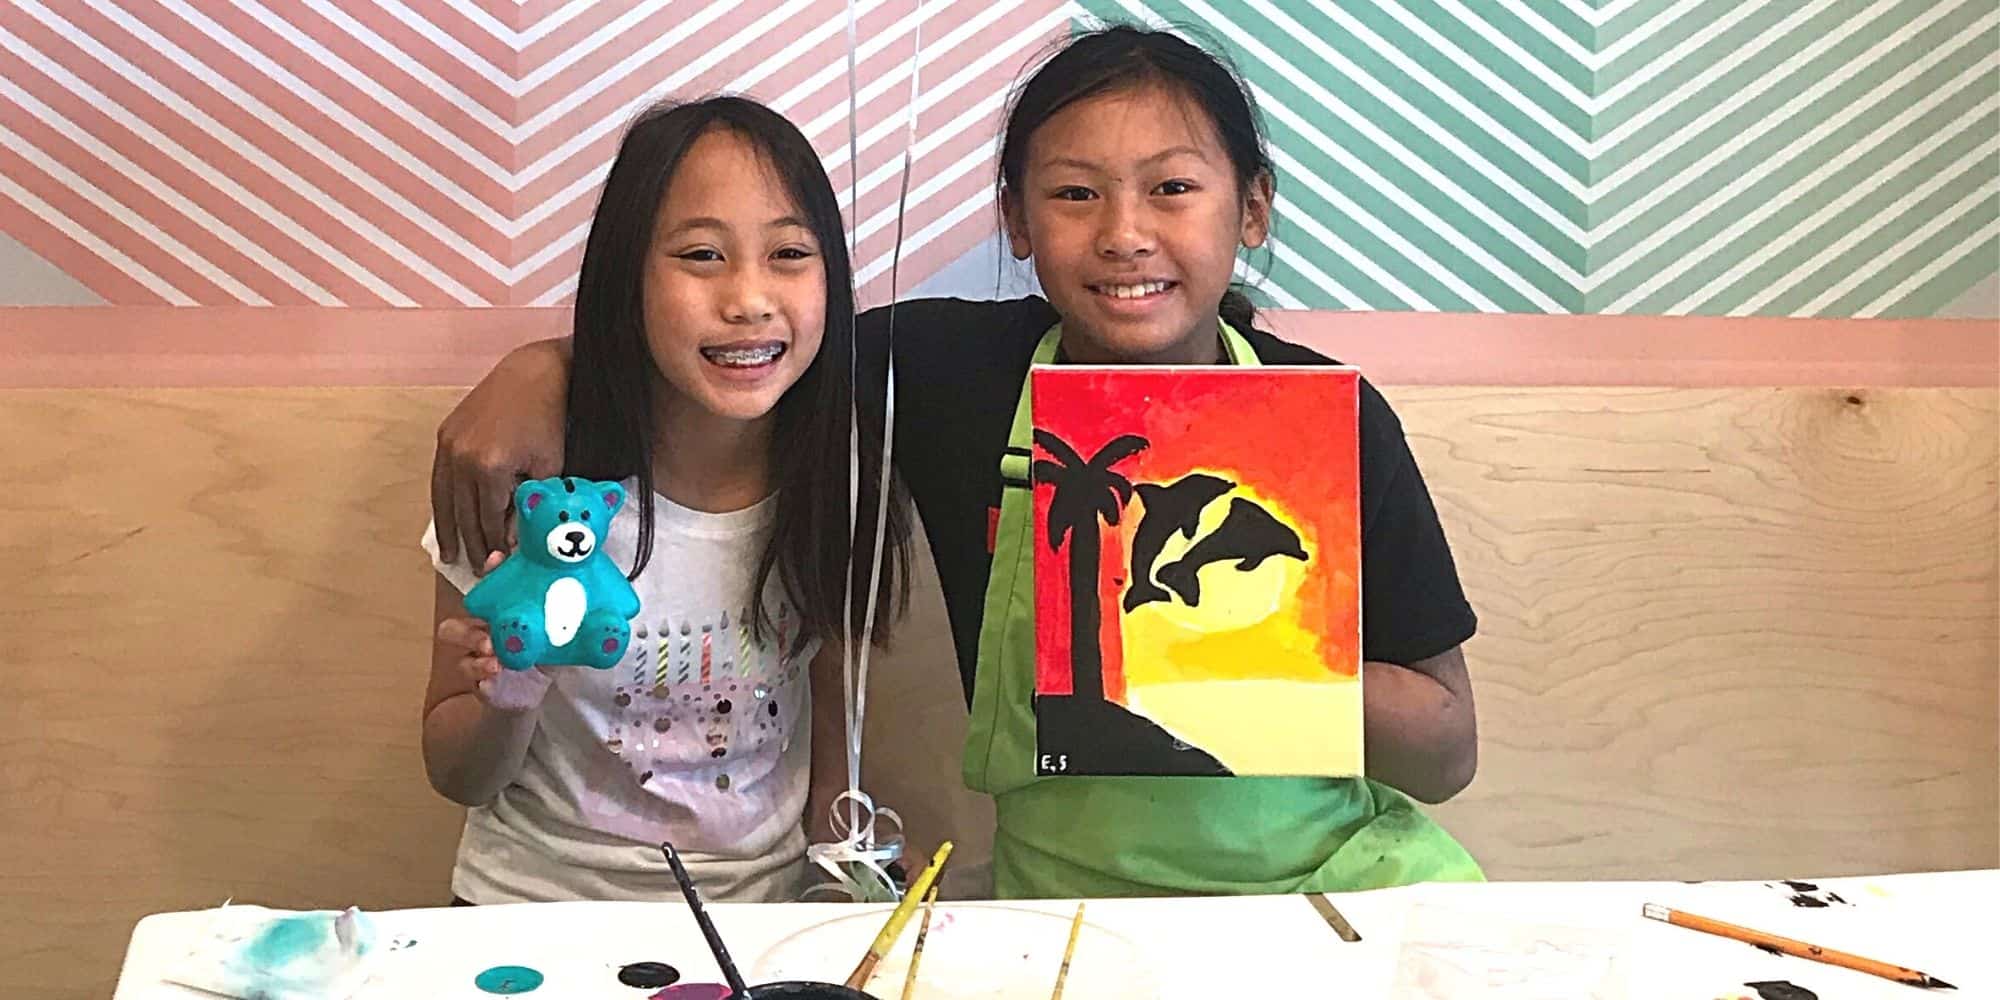 Kids Activities | Painting Activities | Fun things to do - Creatif ...